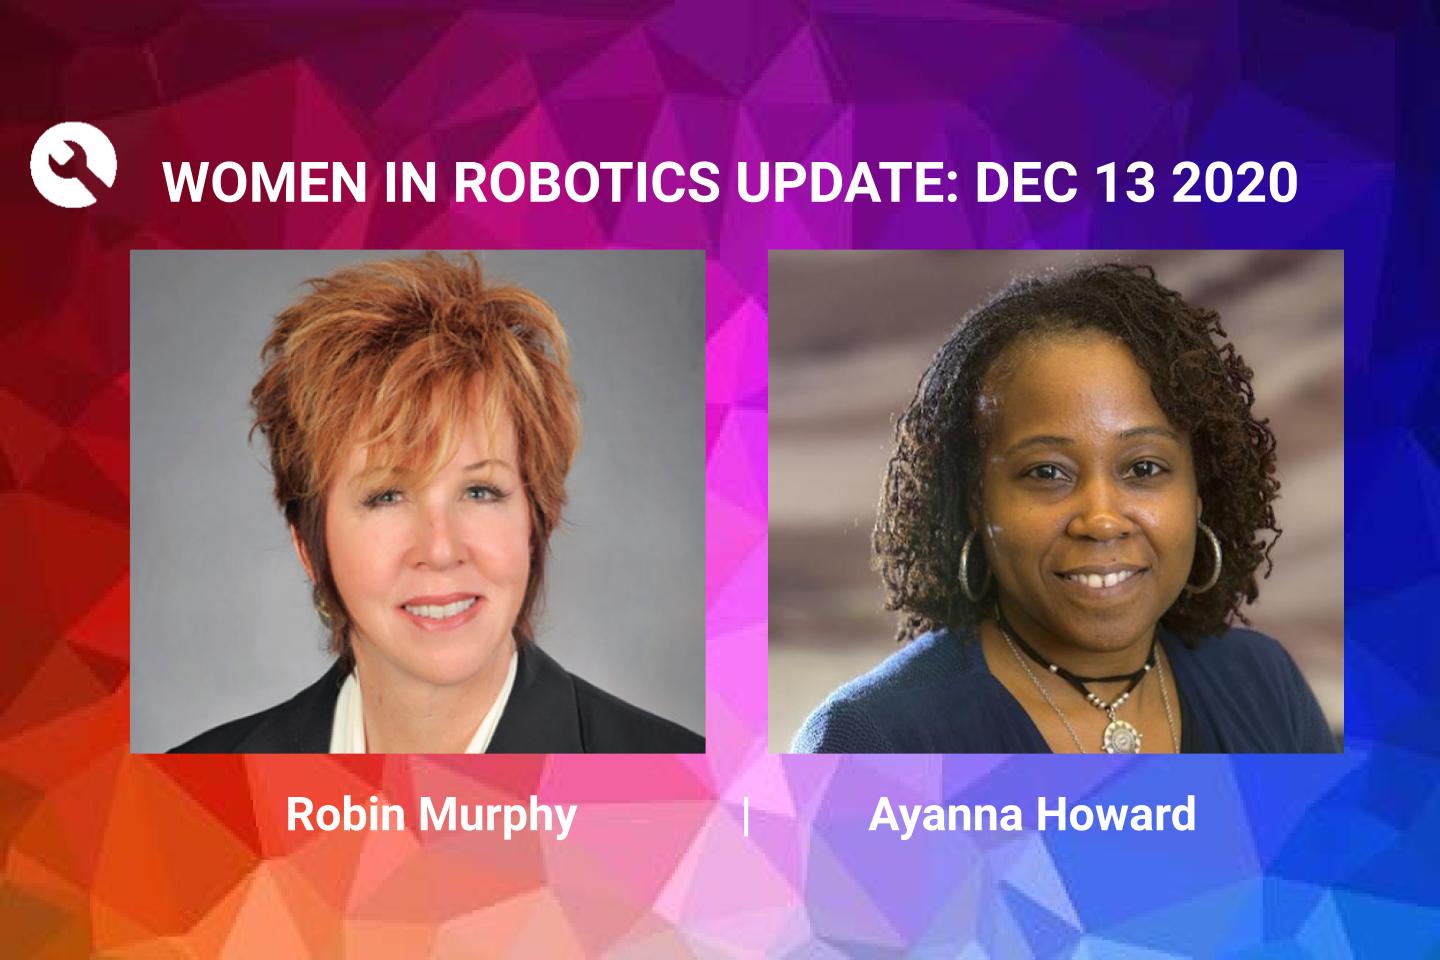 Women in Robotics Update: Robin Murphy, Ayanna Howard